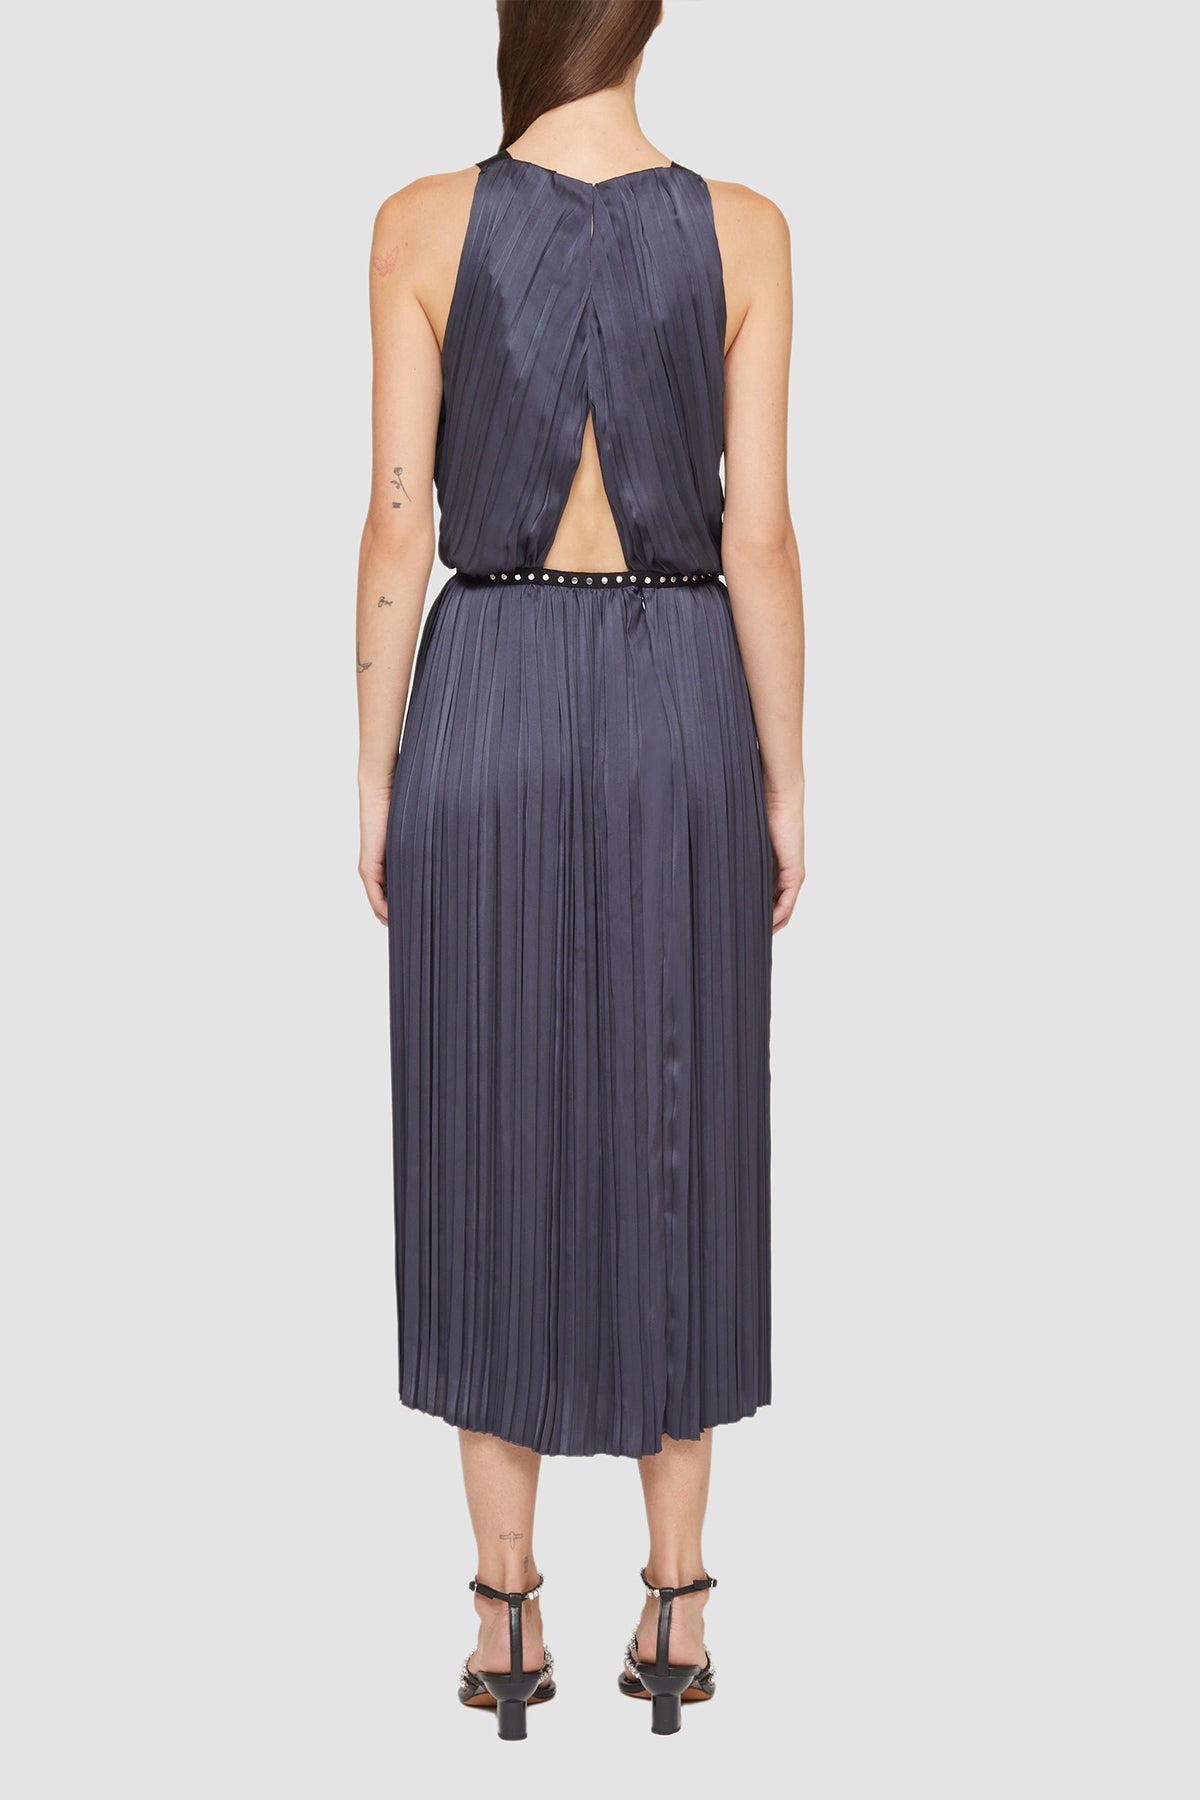 Irregular Pleated Sleeveless Dress in Eclipse - shop-olivia.com